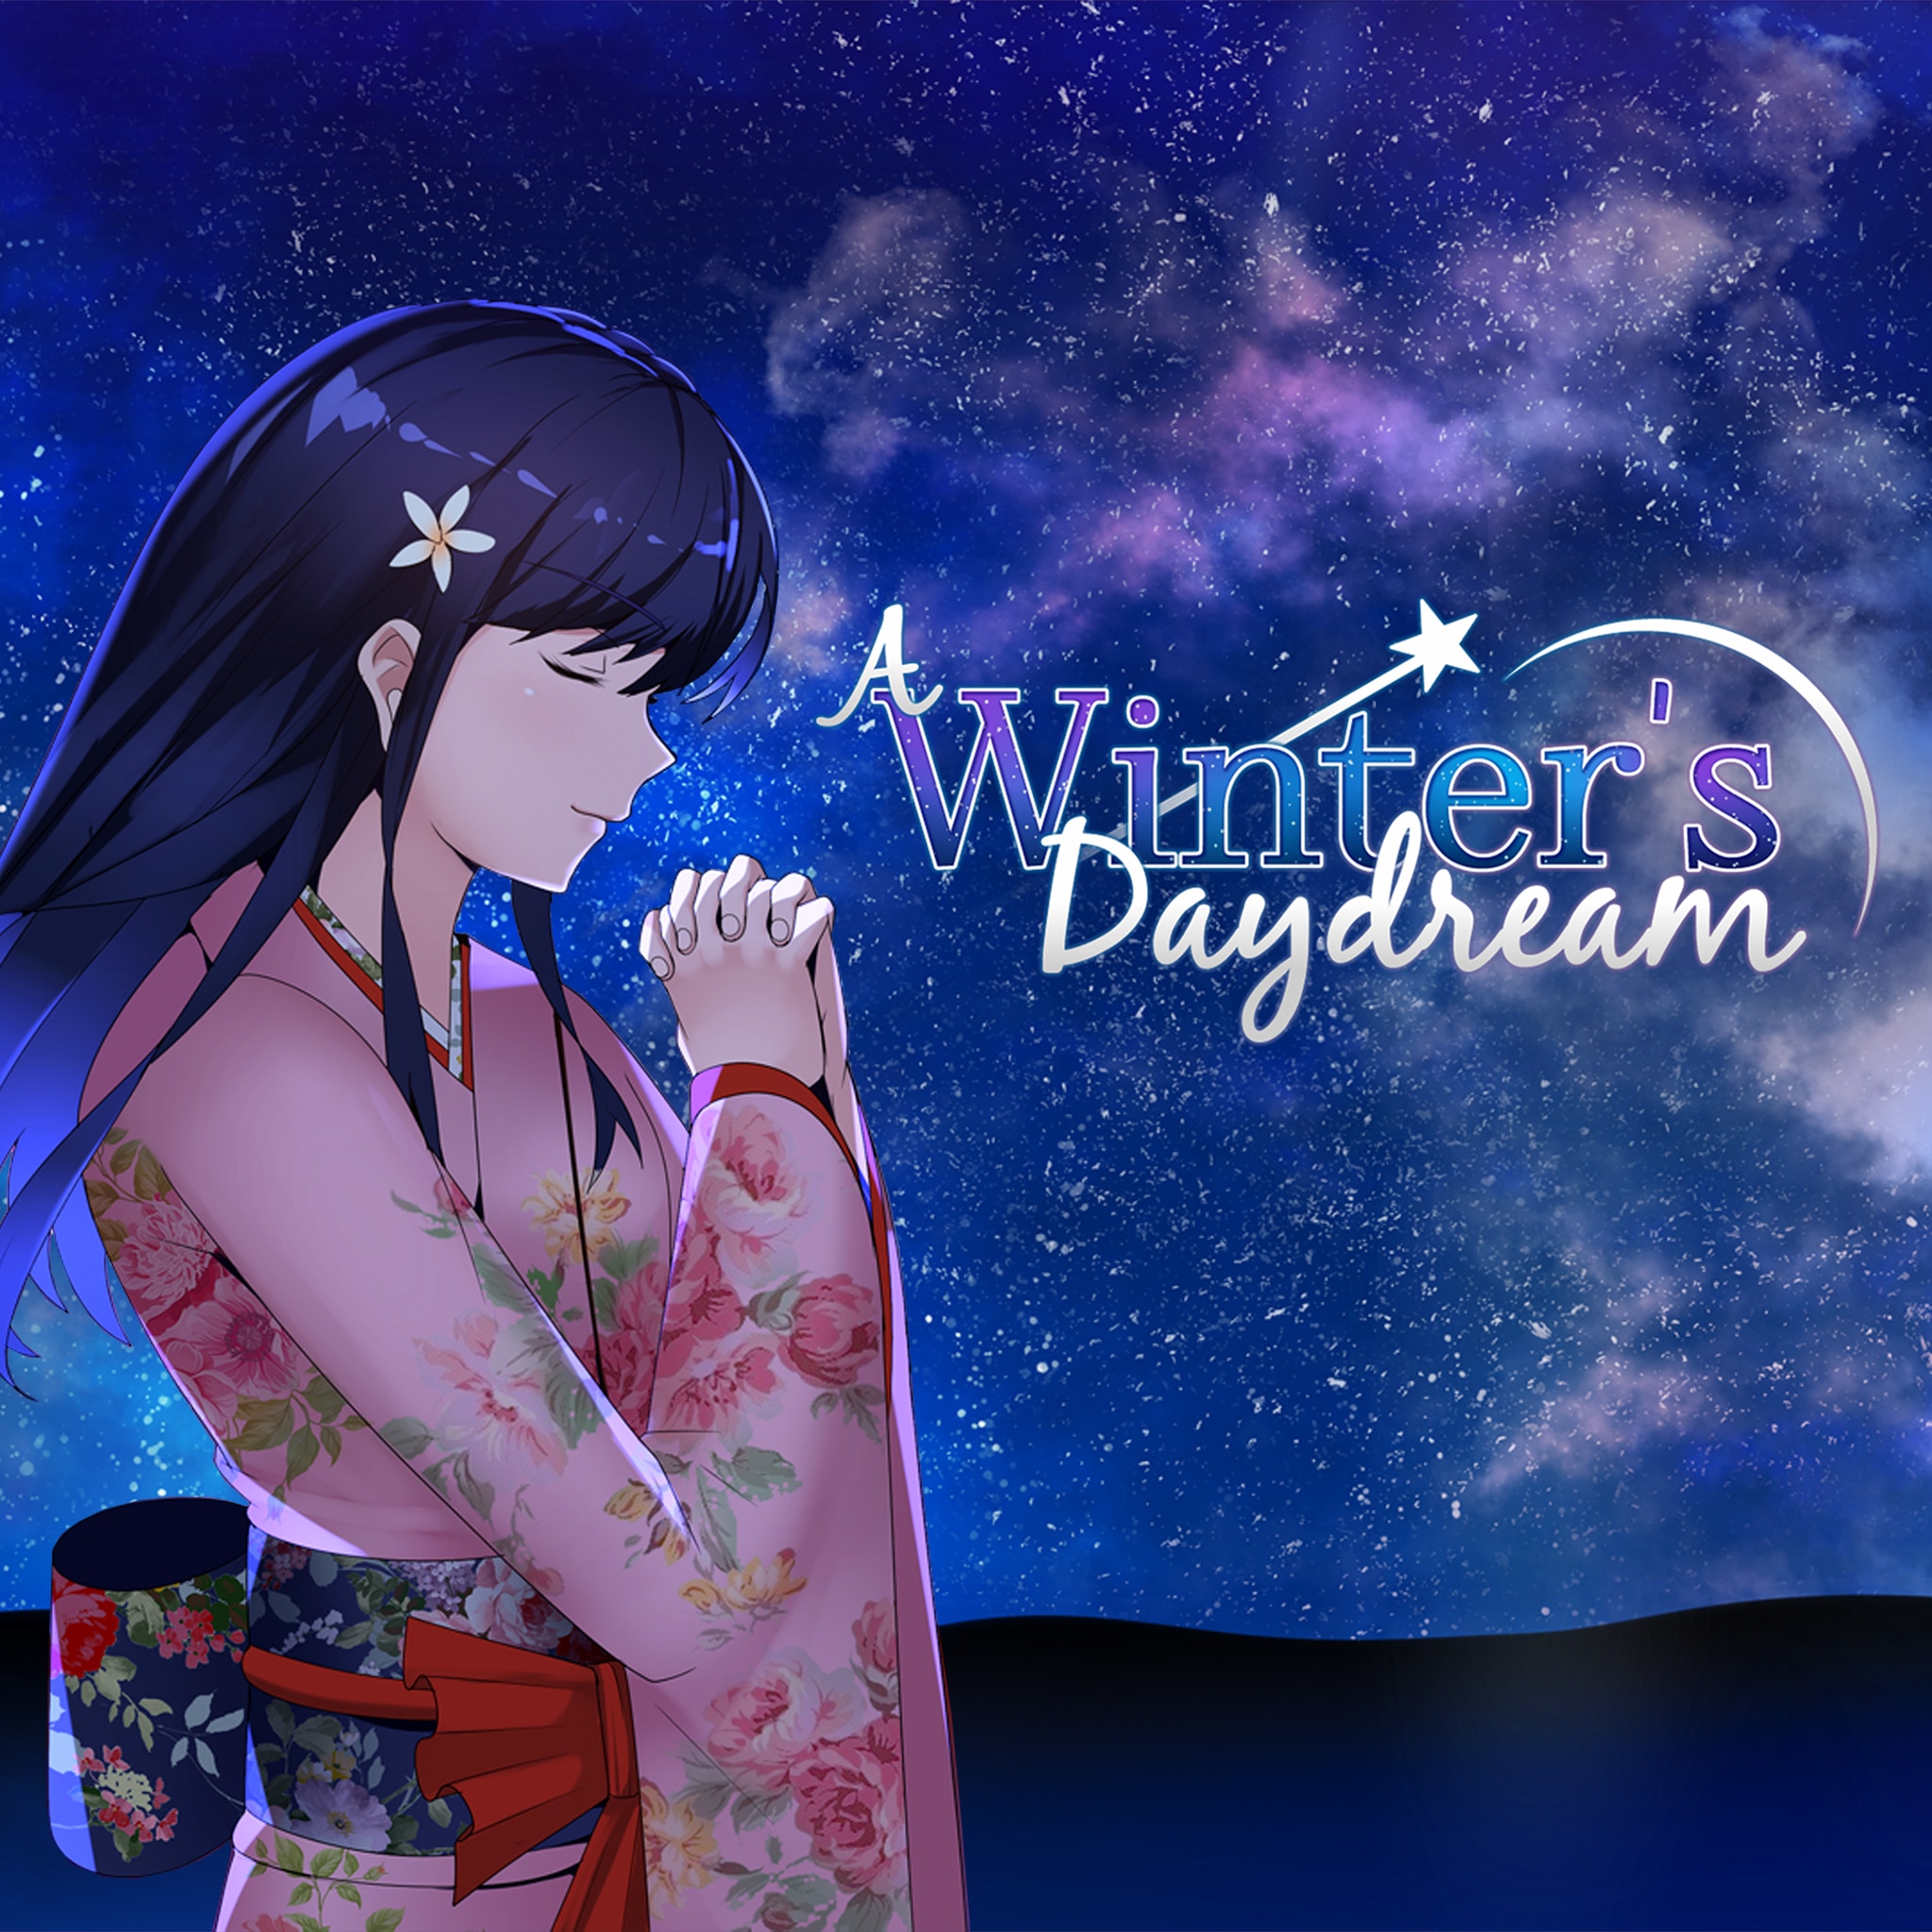 jaquette du jeu vidéo A Winter’s Daydream